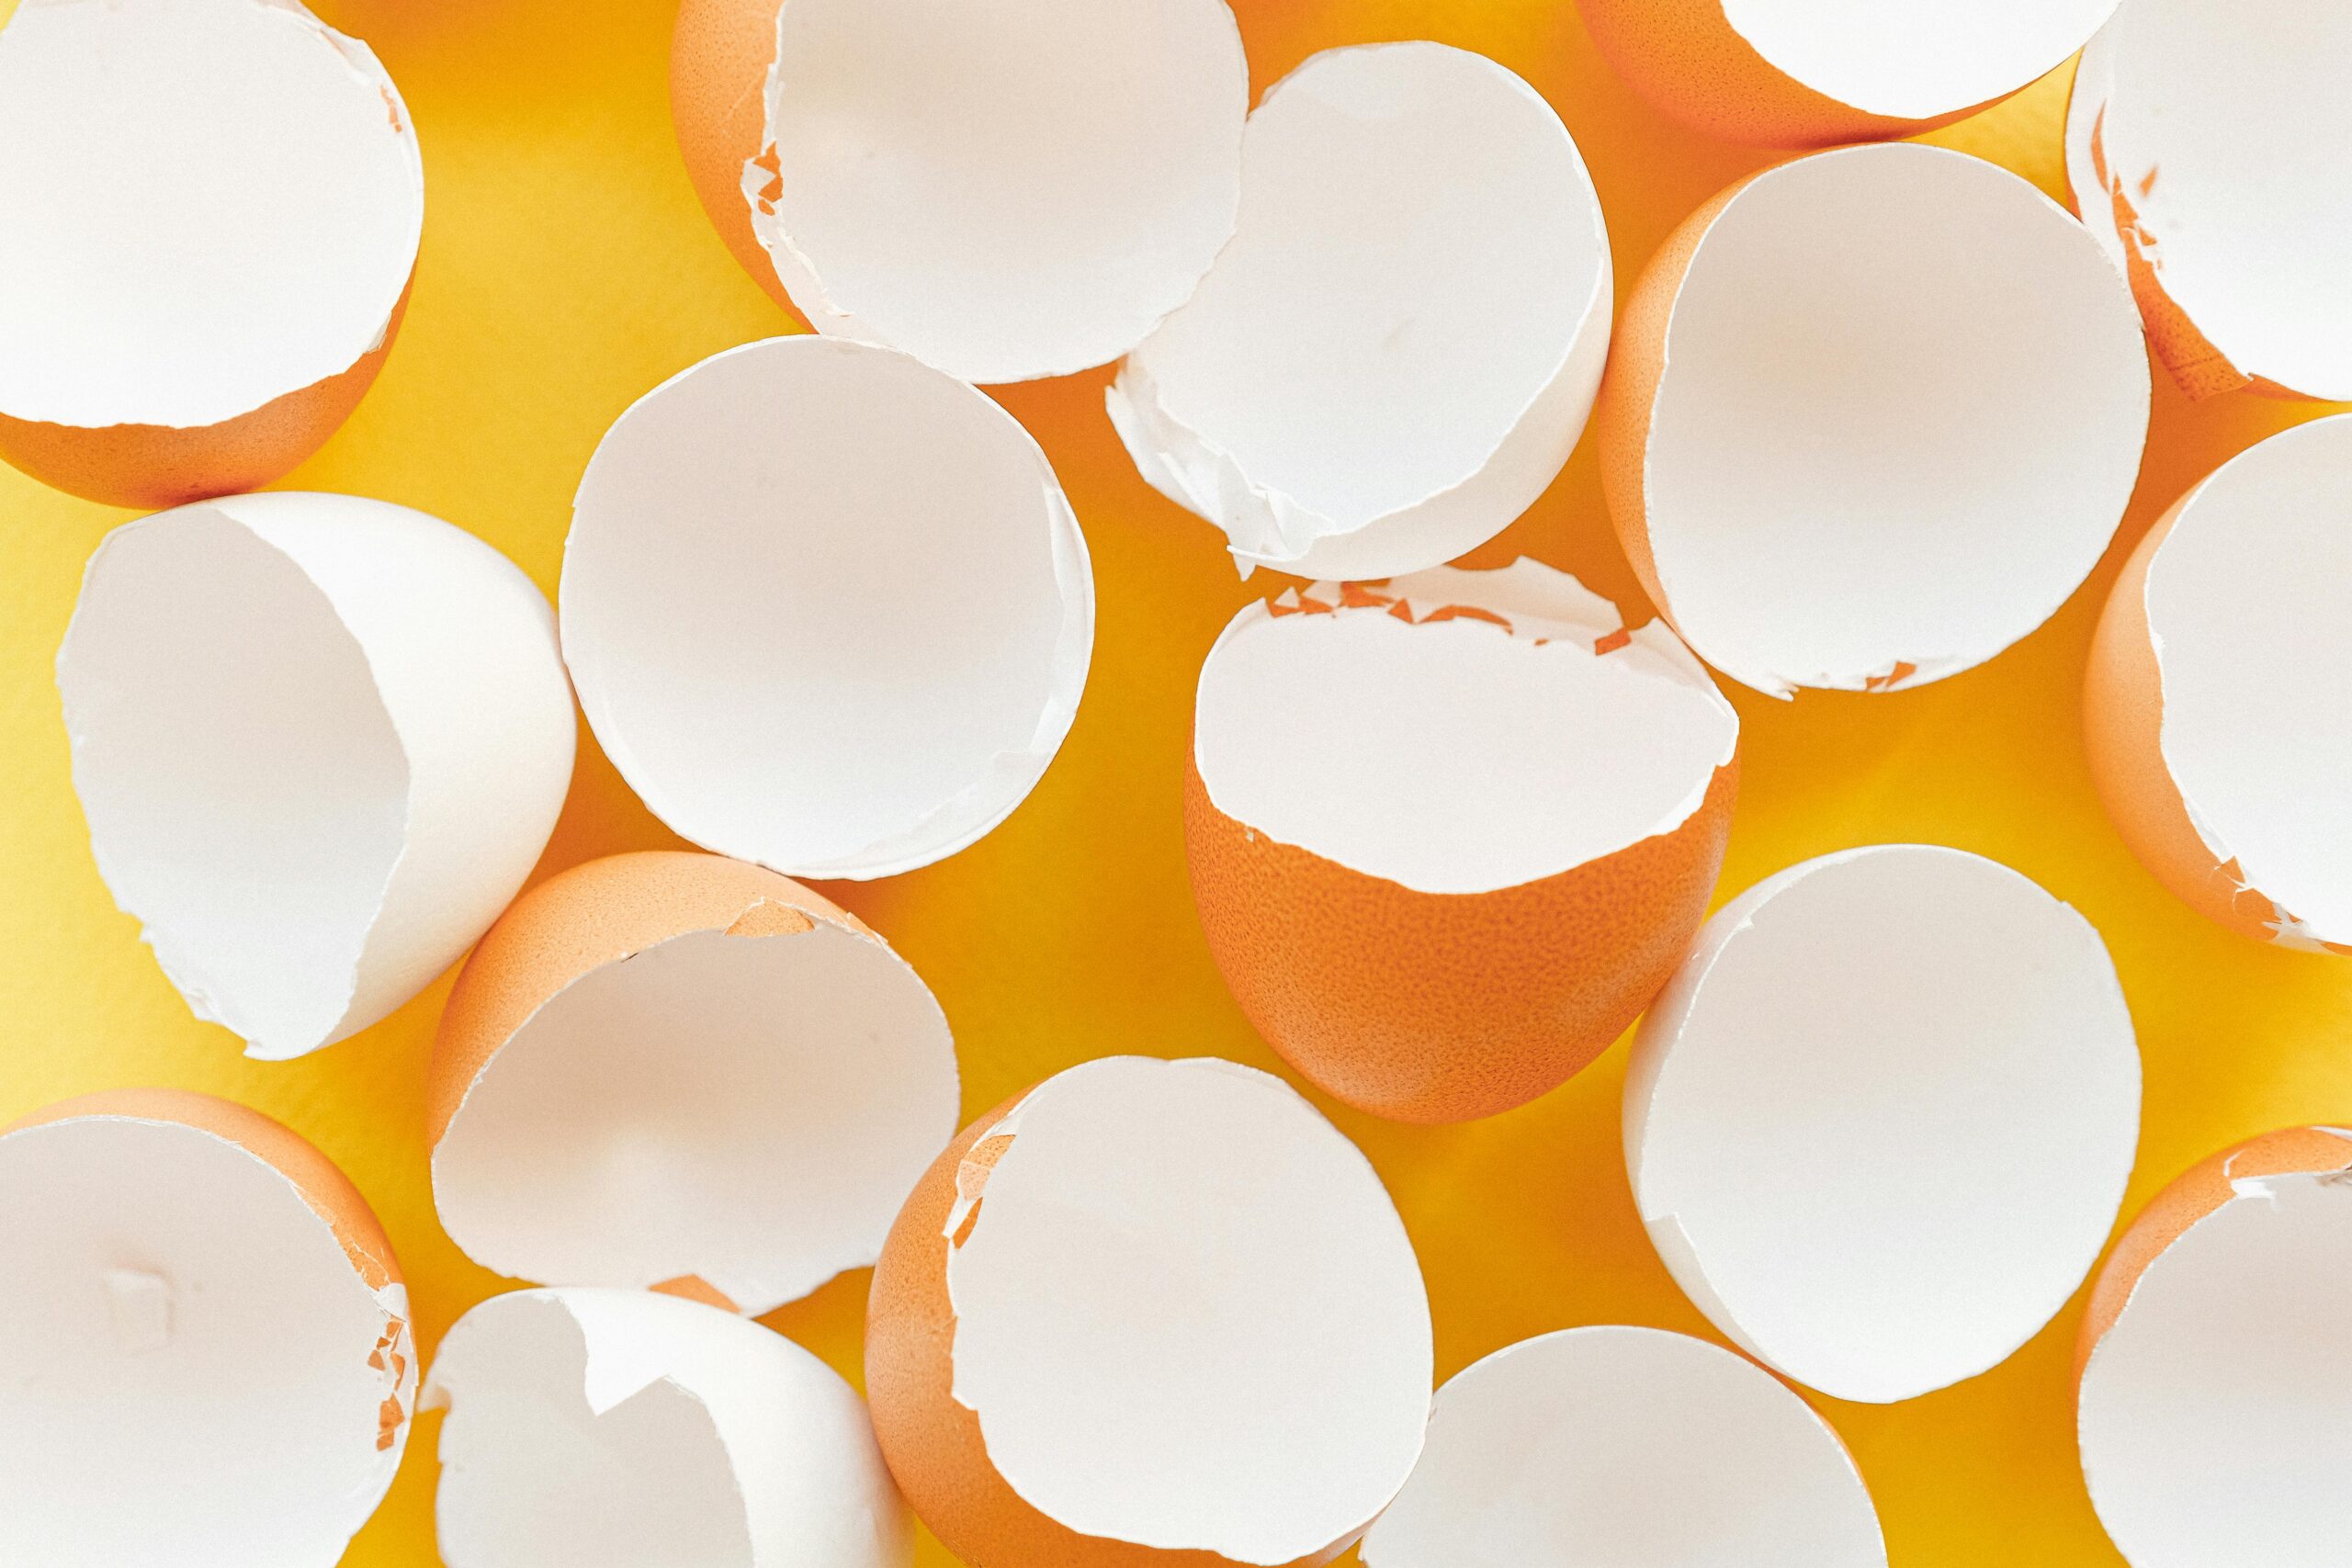 Cracked eggshells